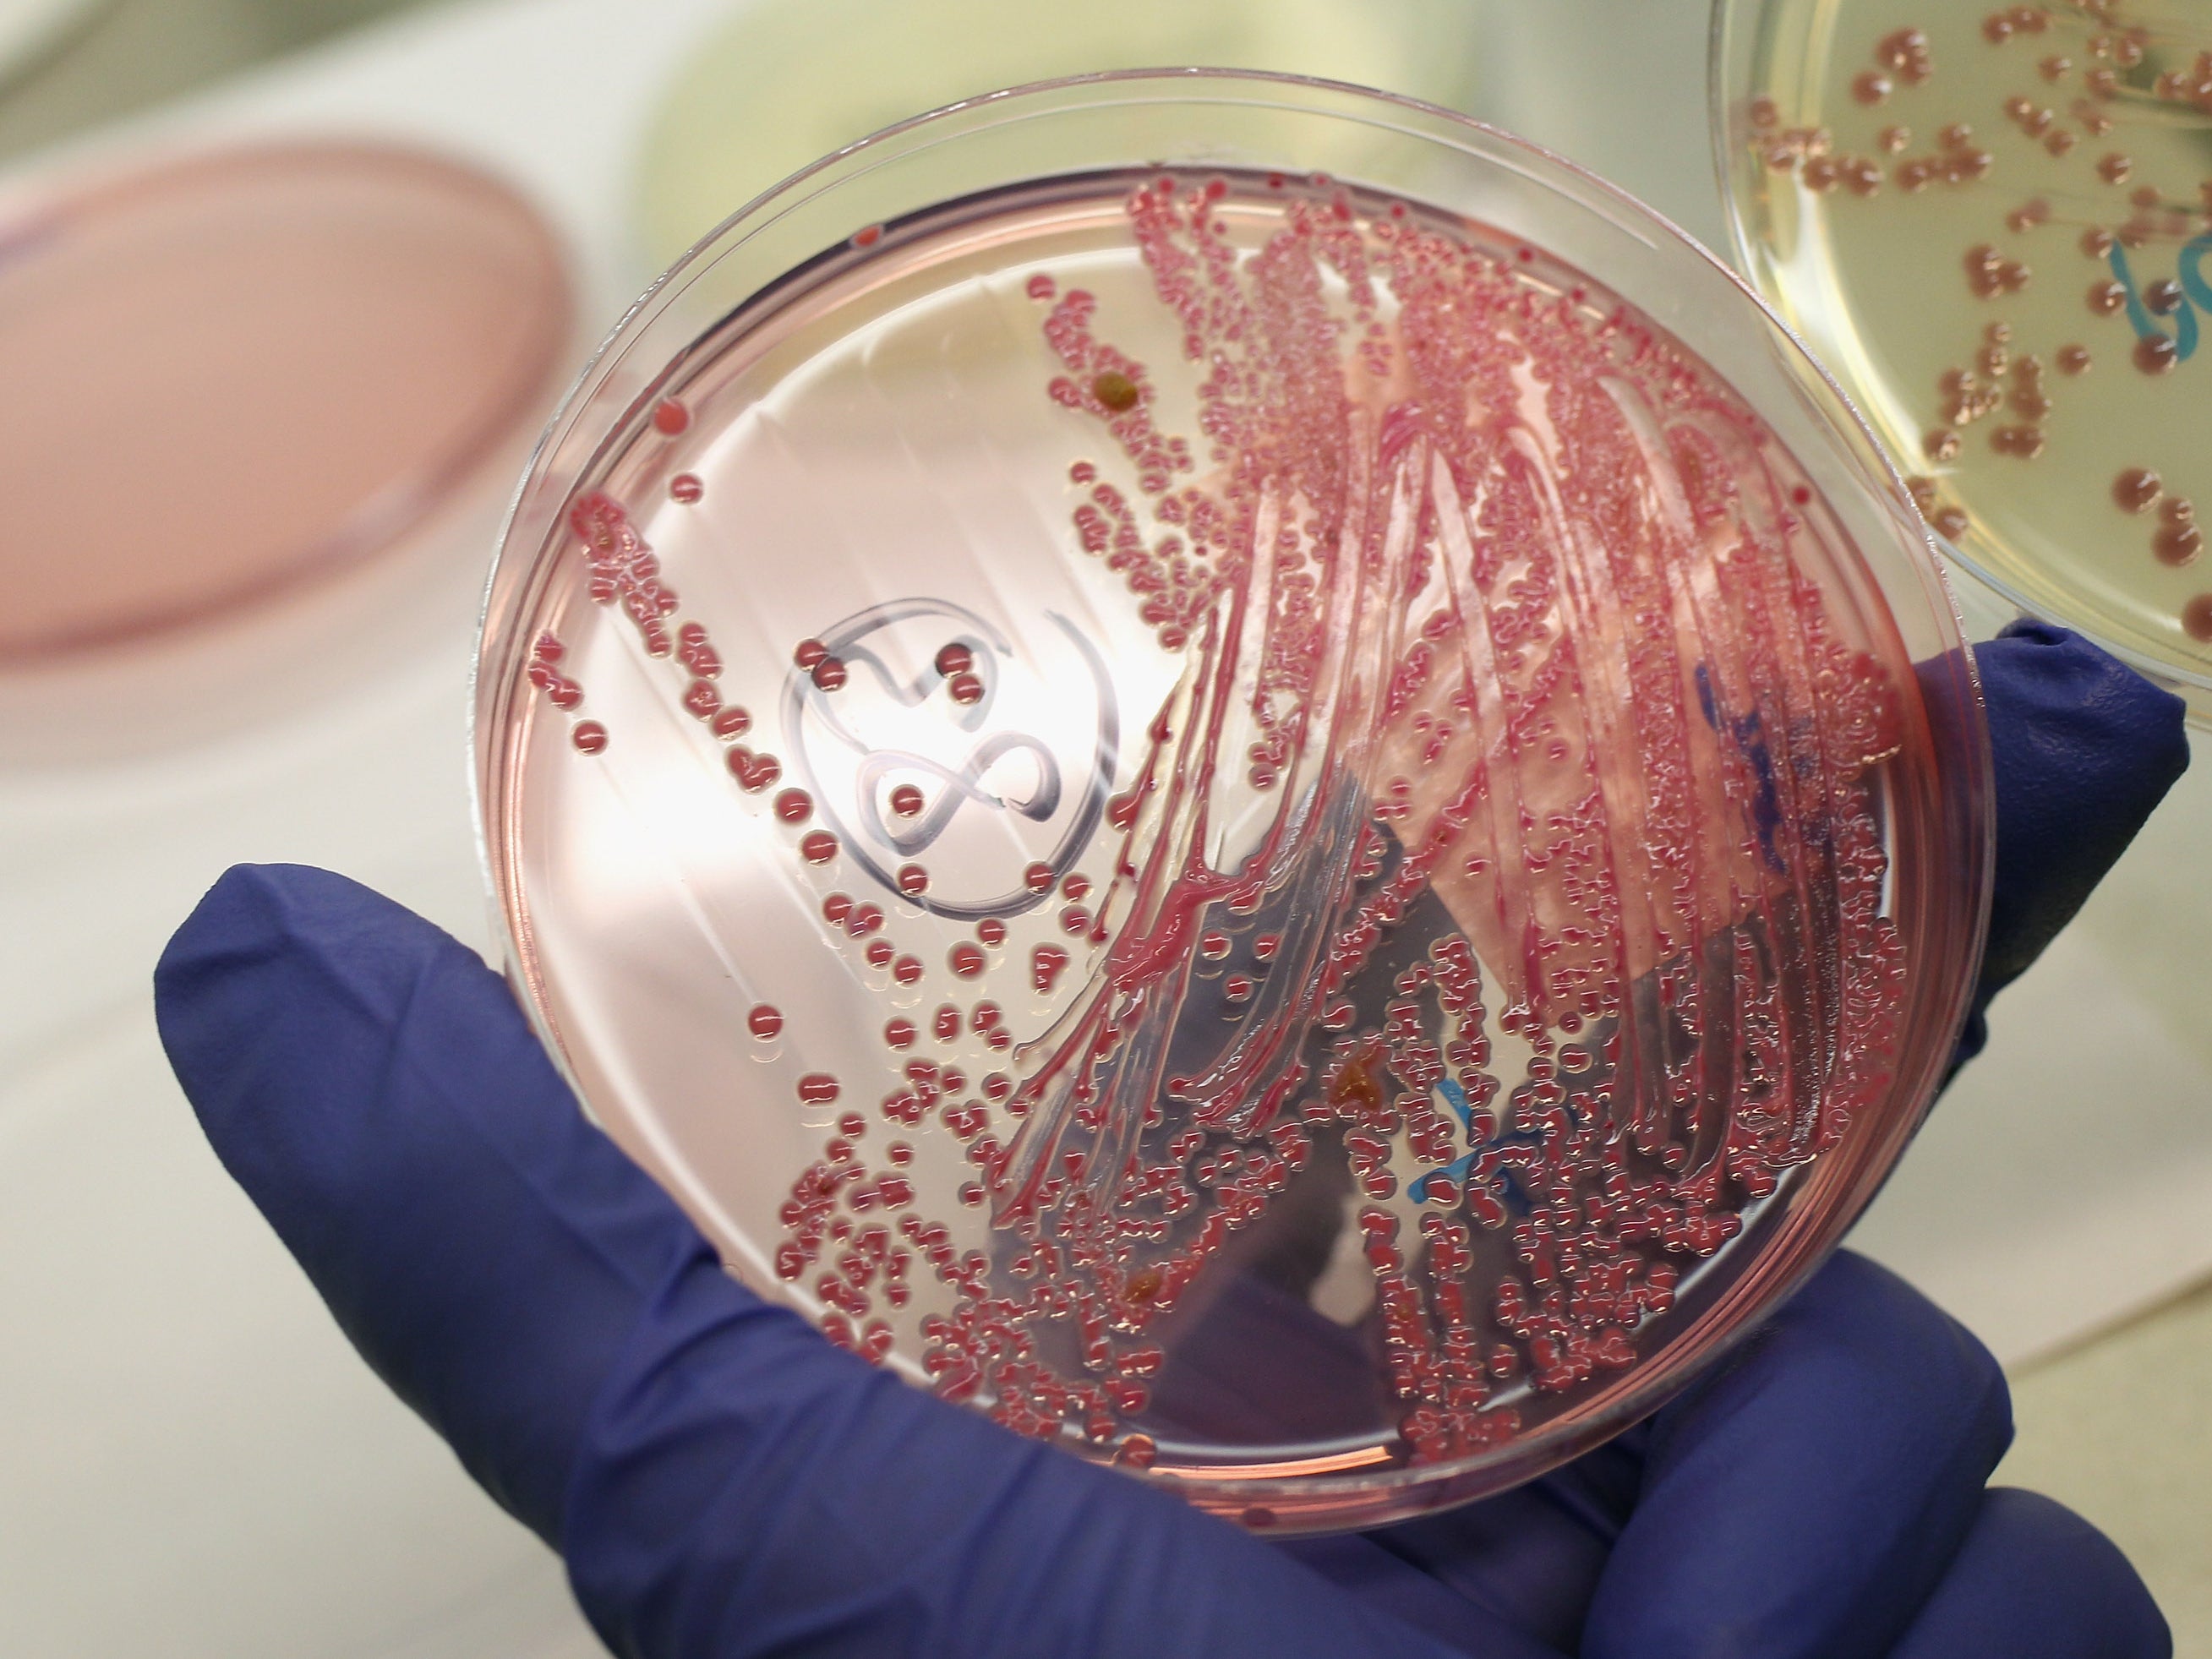 A bacteria culture that shows a positive infection of enterohemorrhagic E. coli